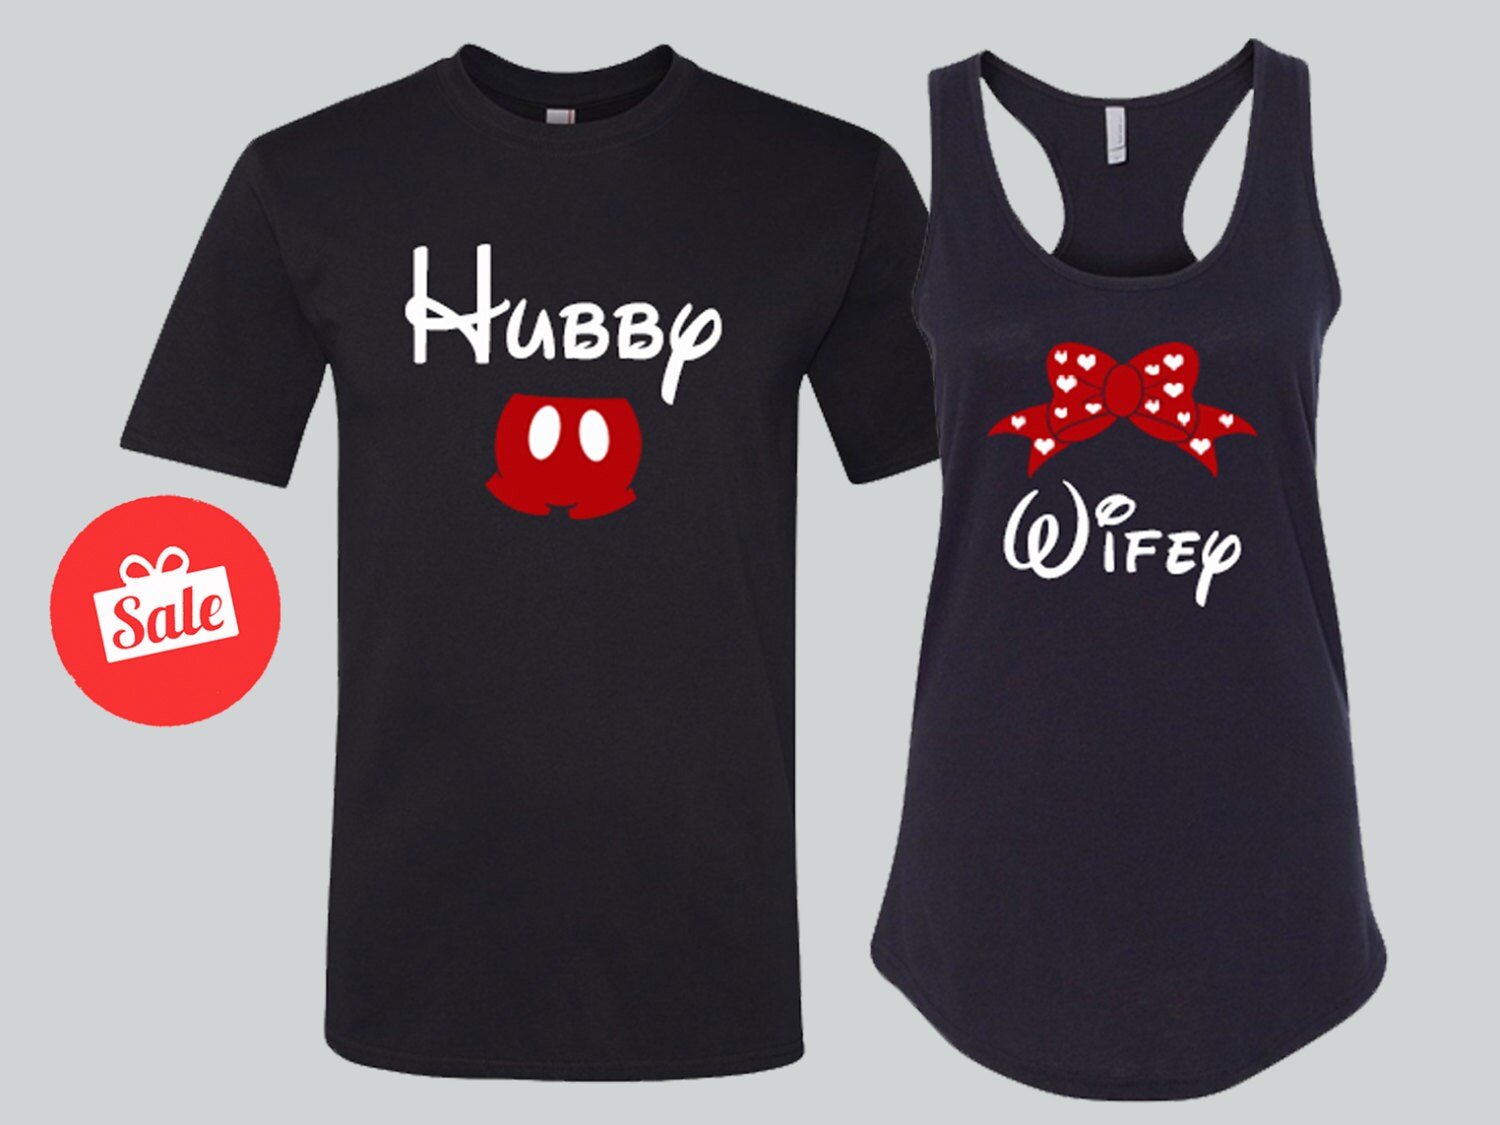 Hubby Wifey Disney Matching Shirts. Disney Couples Shirt.